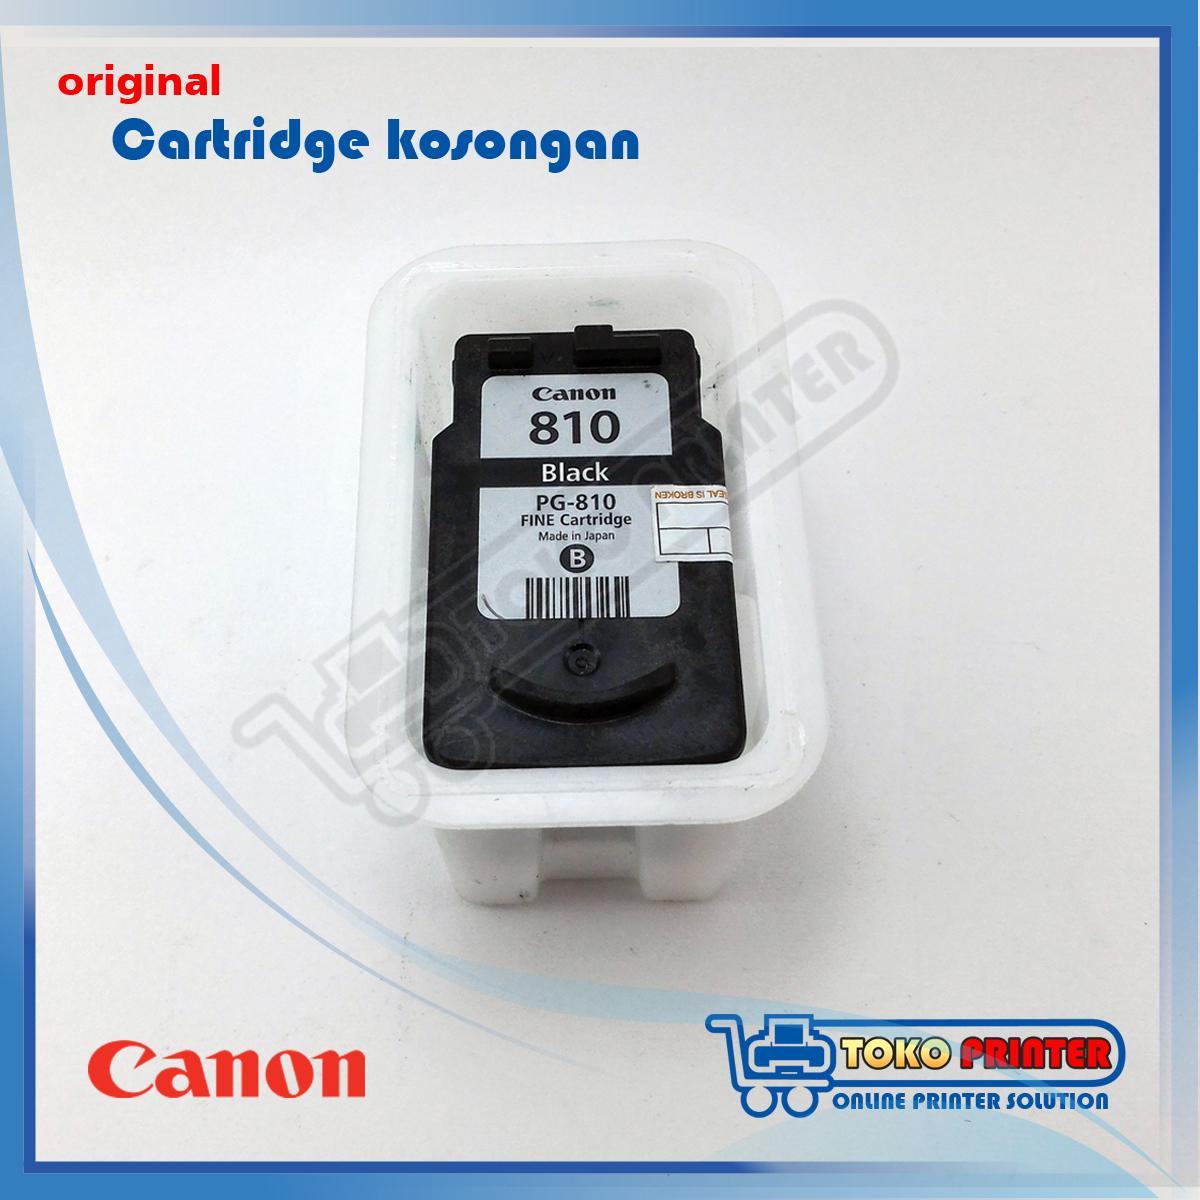 Cartridge Kosongan Canon PG-810